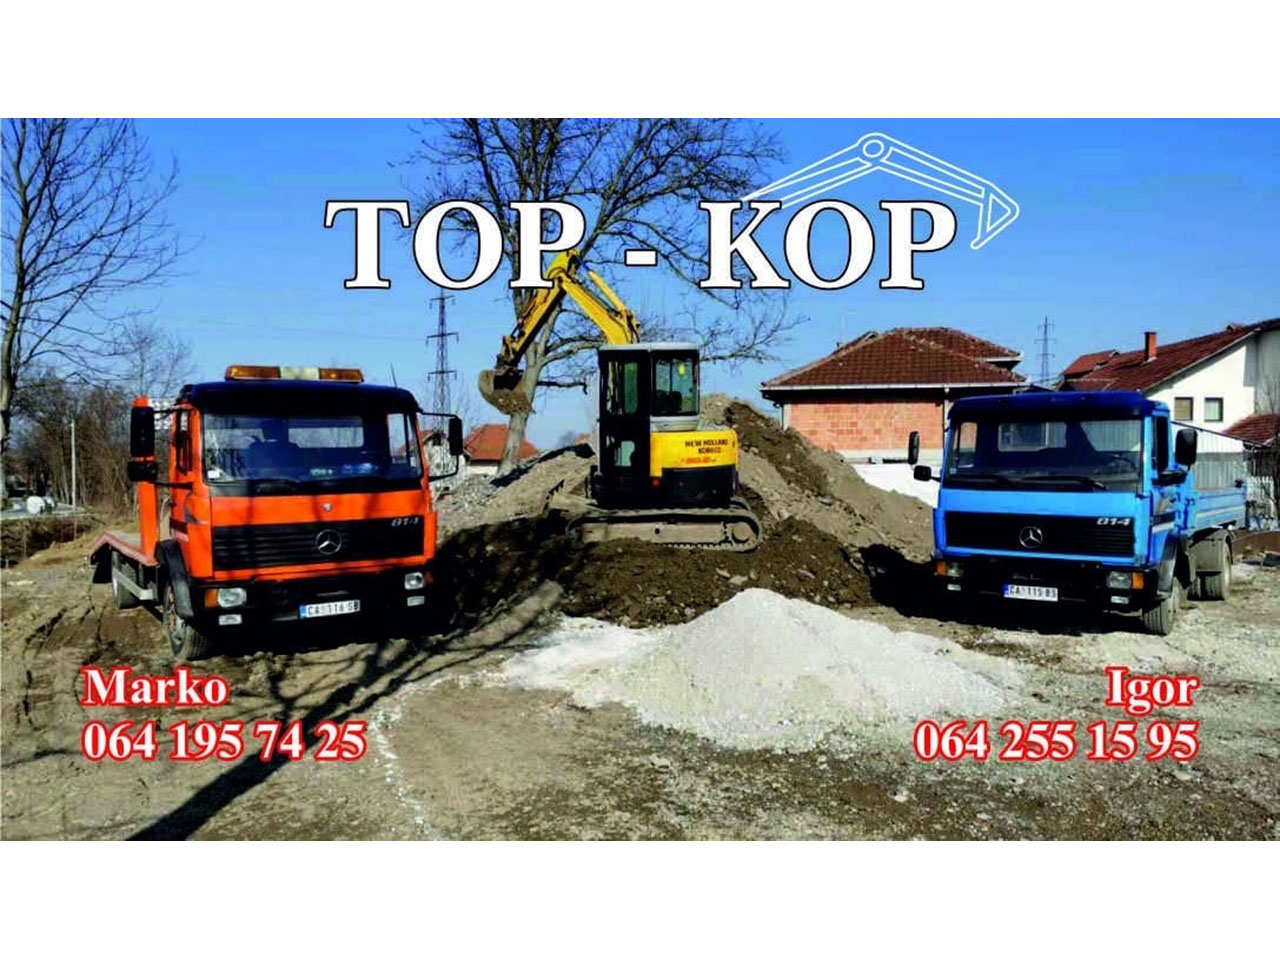 Slika 1 - ISKOPI TOP - KOP - Građevinske firme i usluge, Čačak